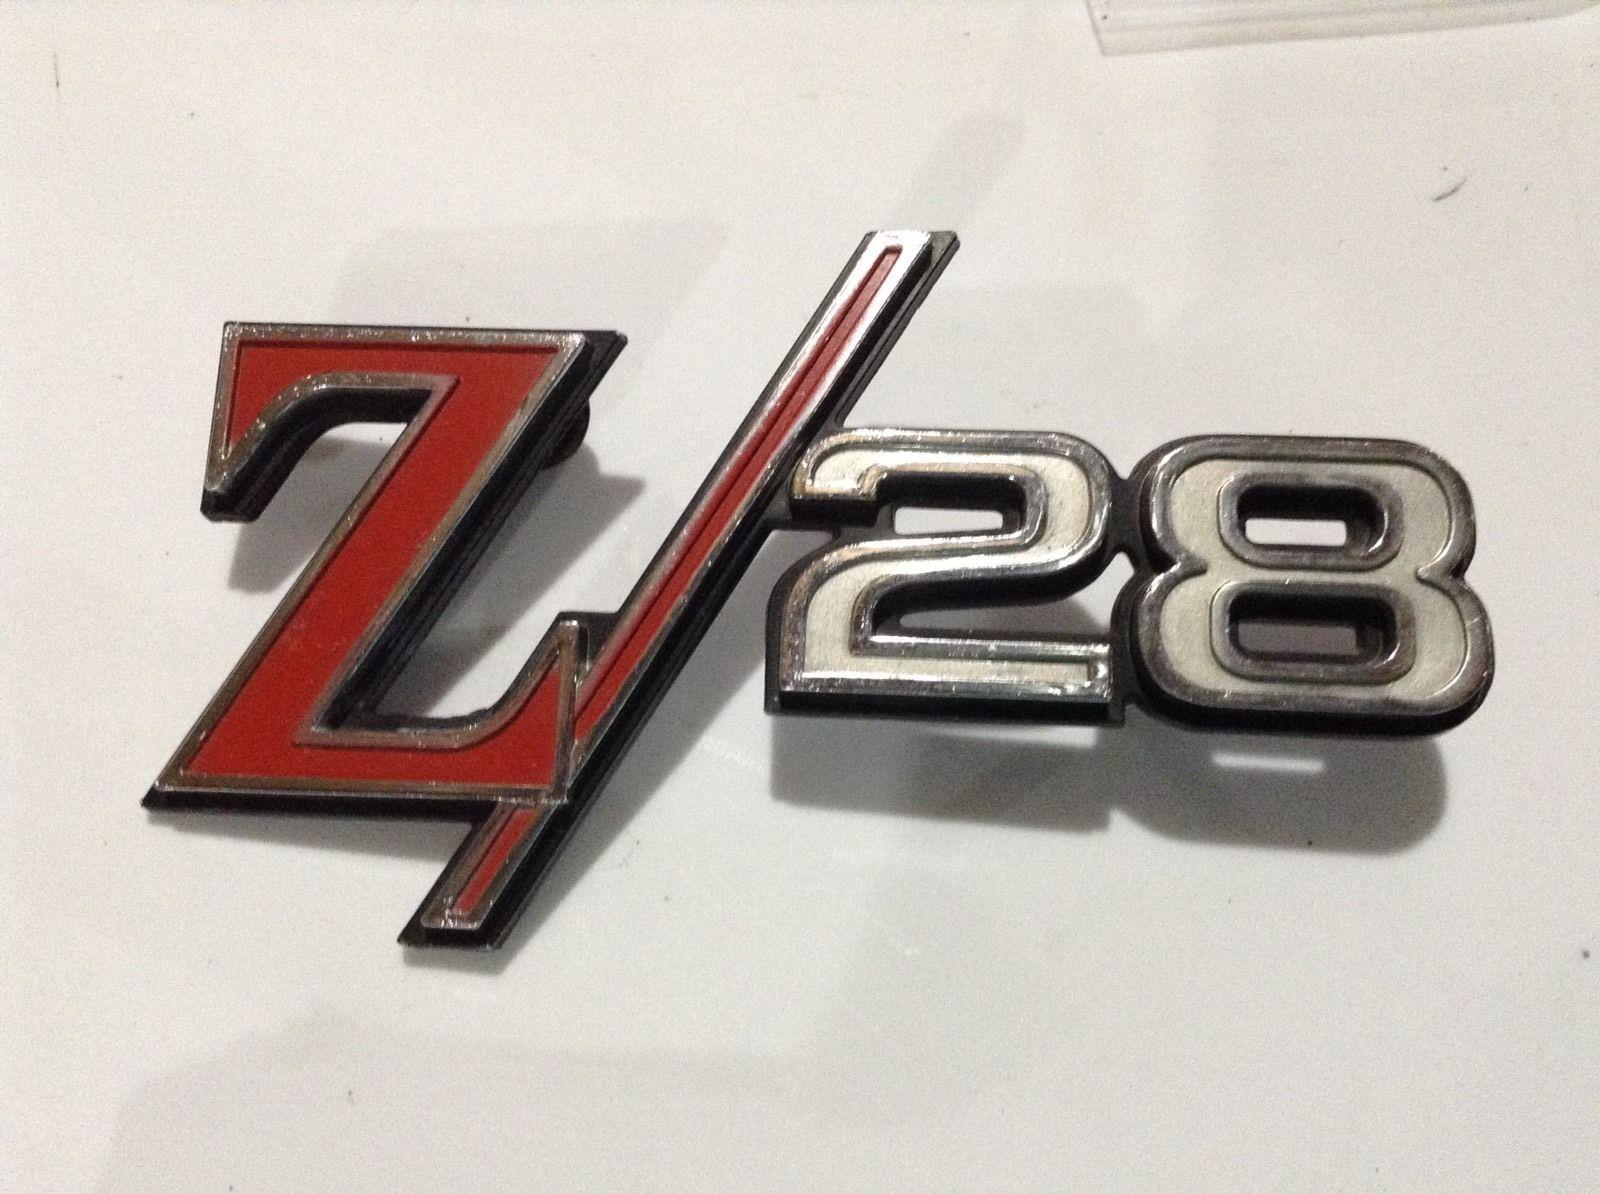 Camaro Z28 Logo - 69 CAMARO Z28 REAR TAIL PANEL EMBLEM, GM PART #8745869, USED | eBay